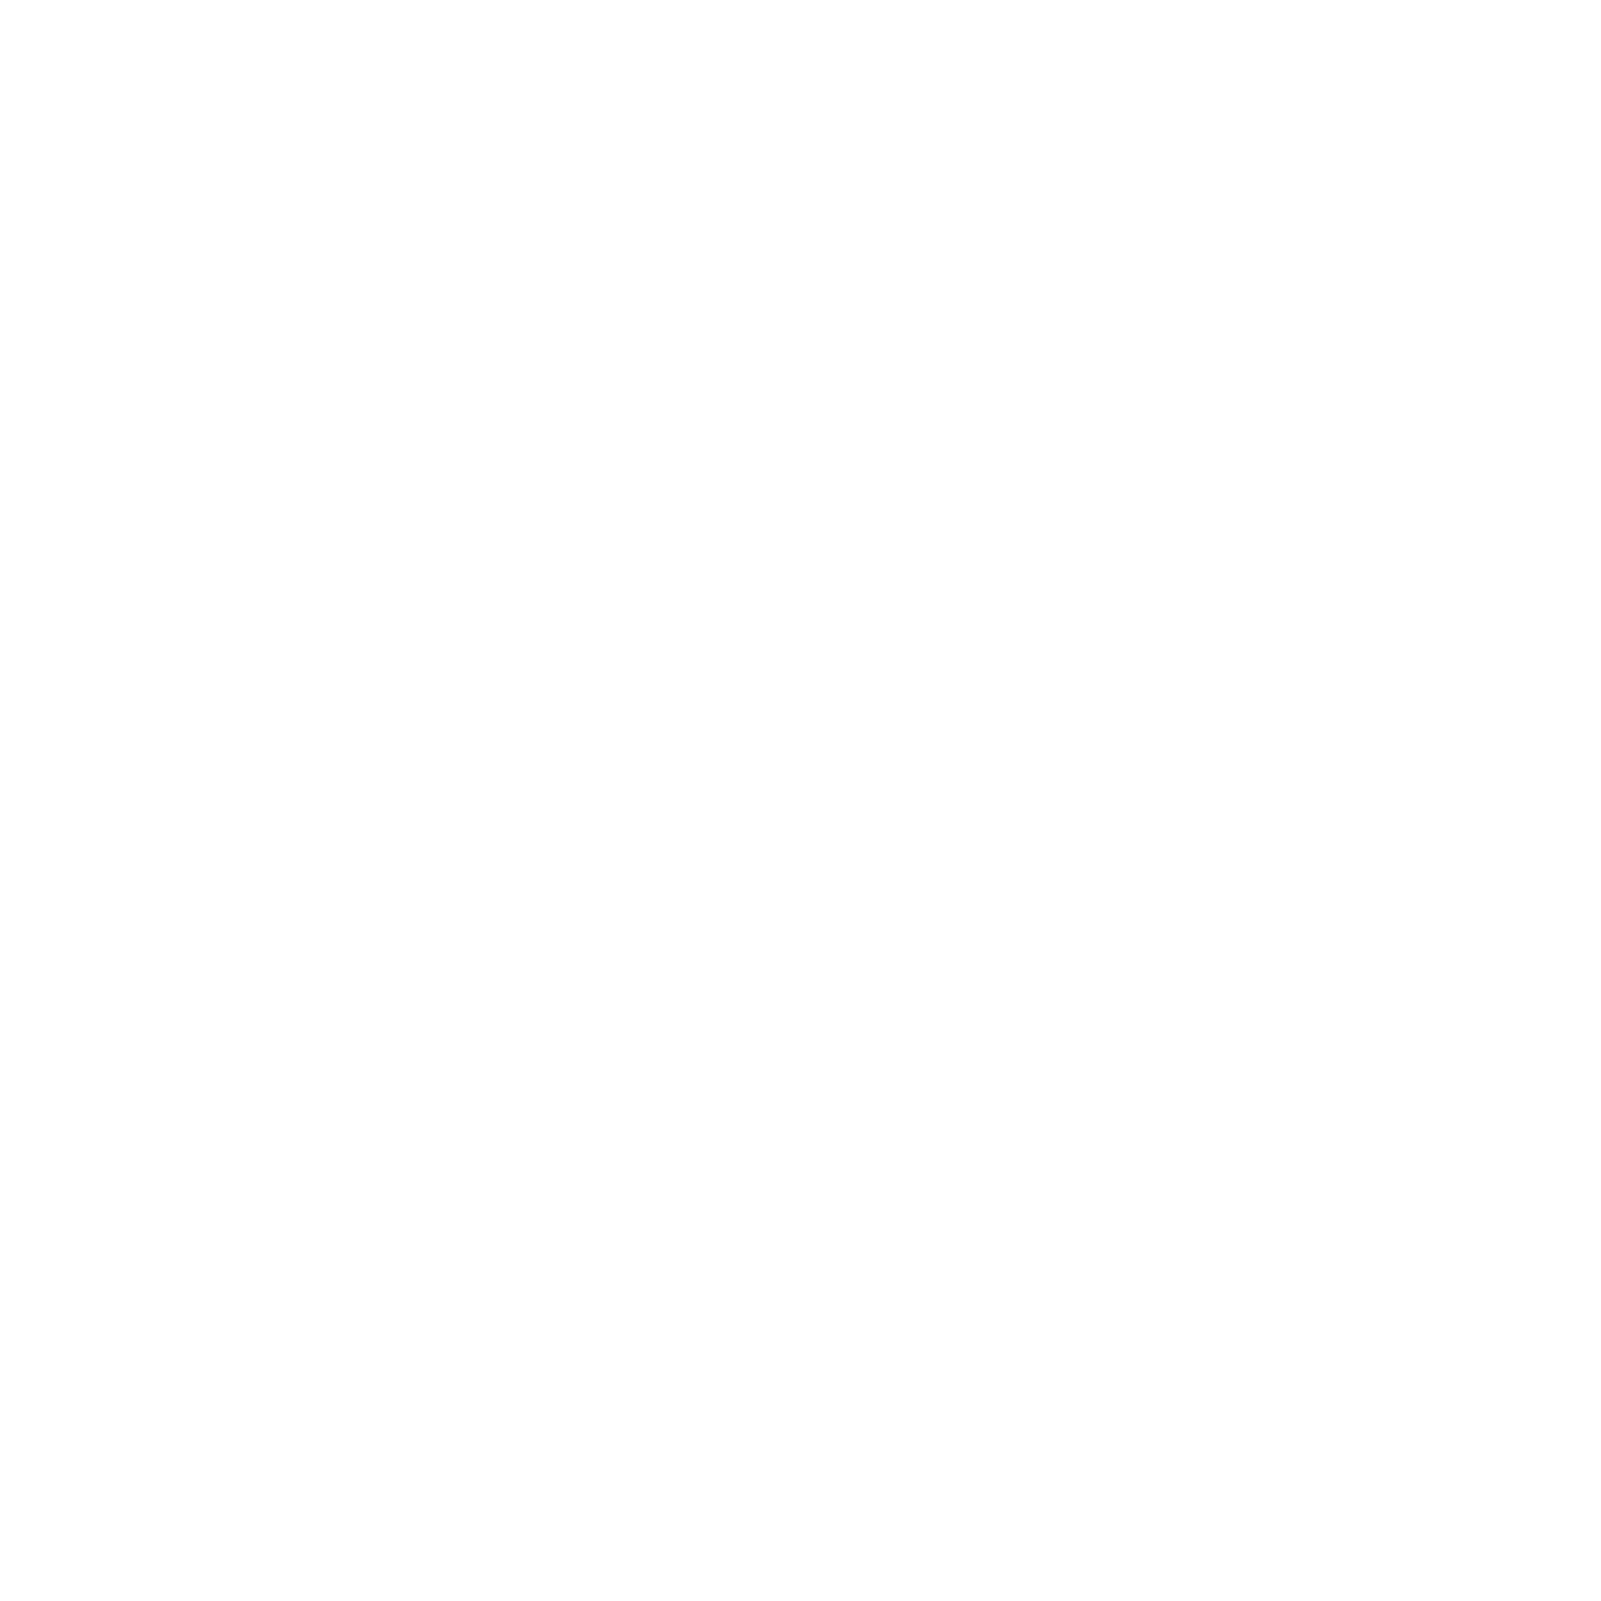 TParty logo